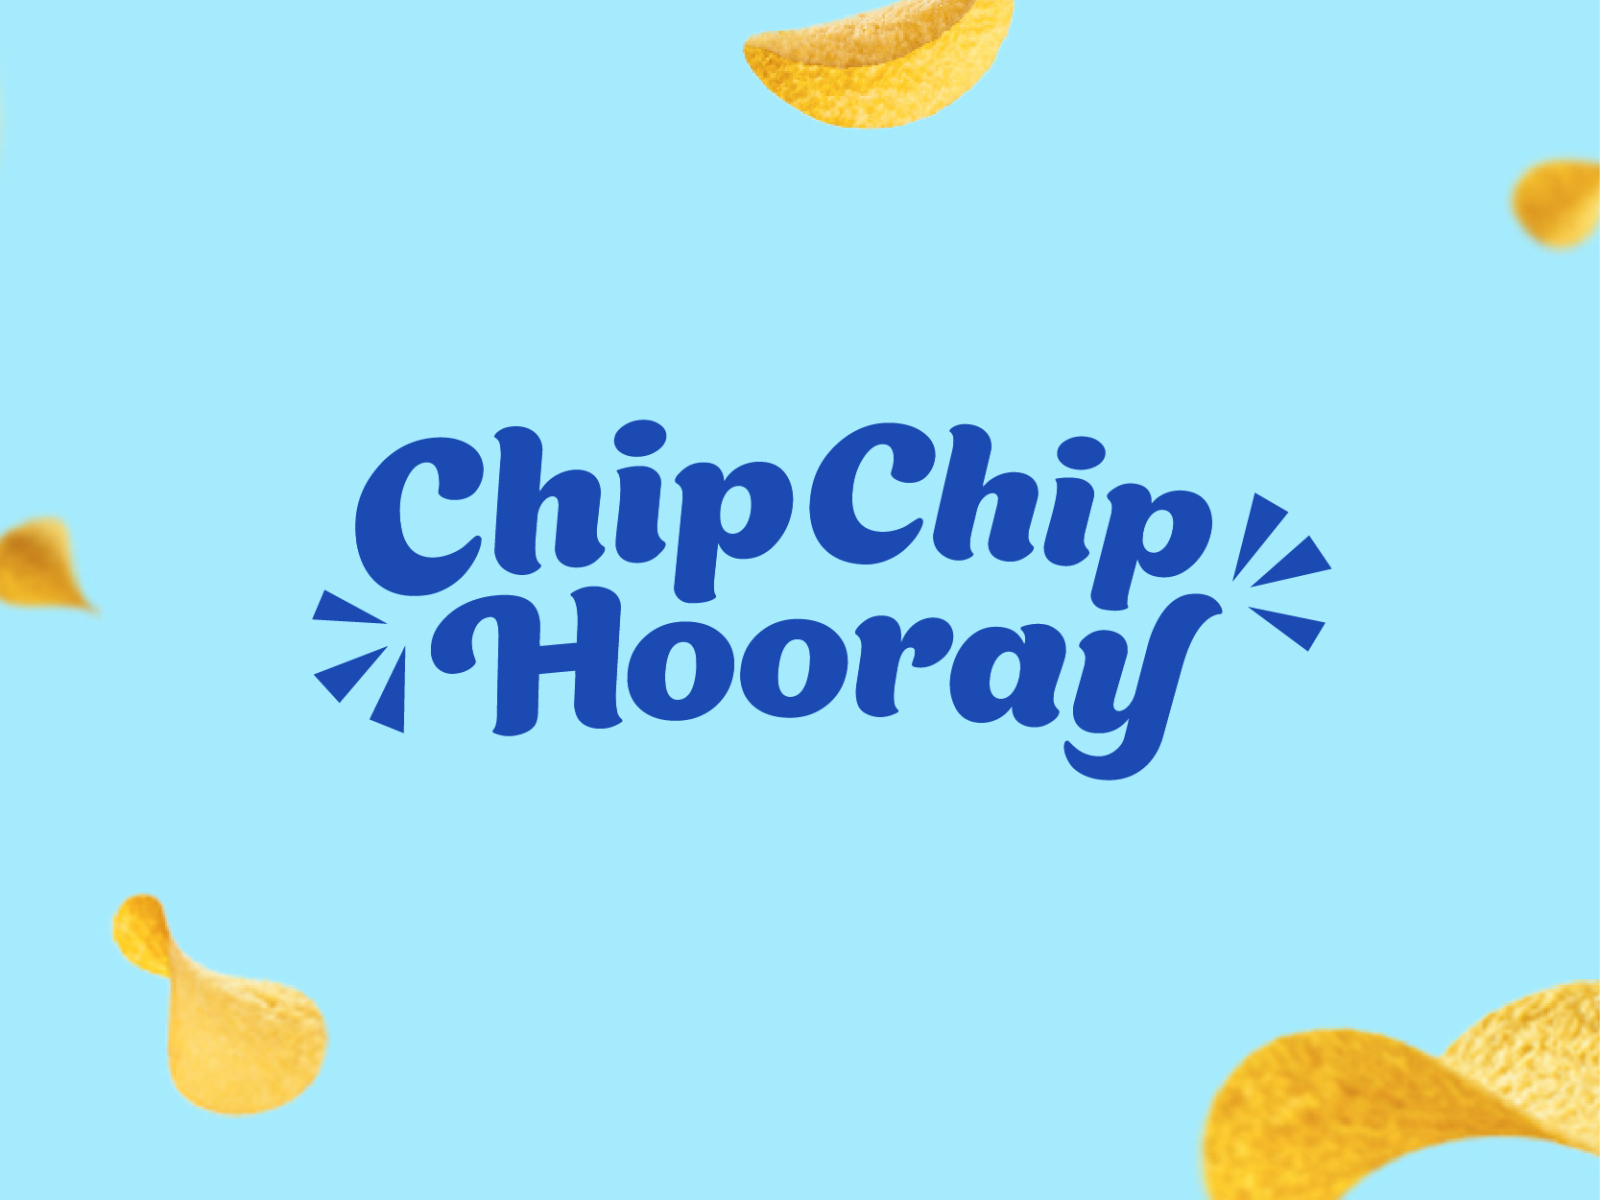 chip-chip-hooray-by-luthfi-juliansyah-on-dribbble